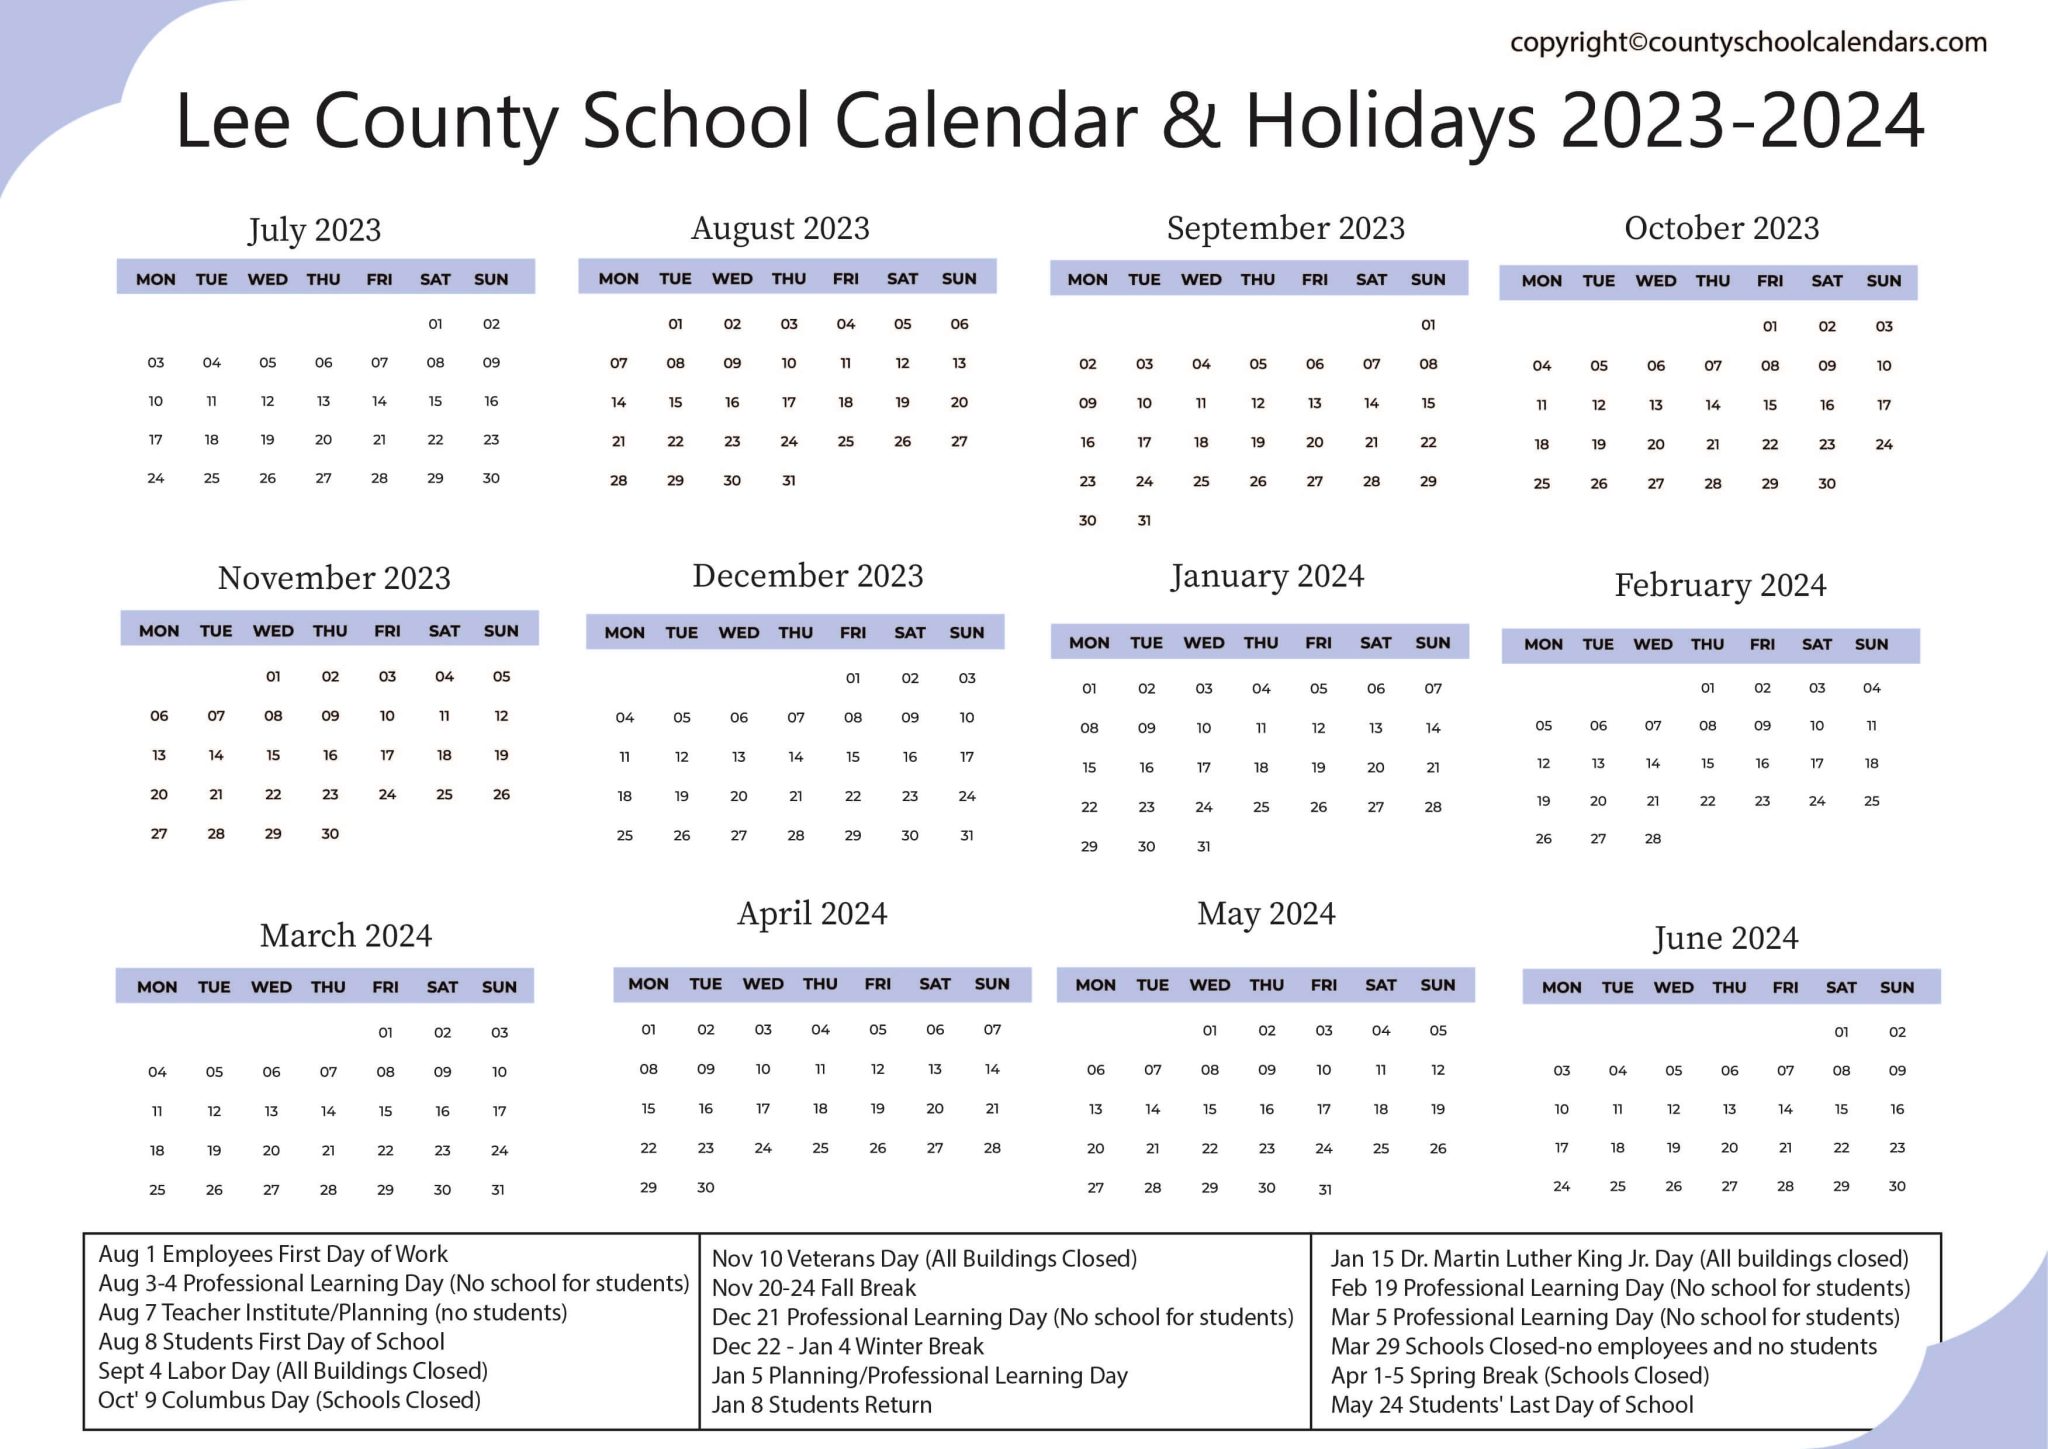 Lee County School Calendar & Holidays 2023-2024